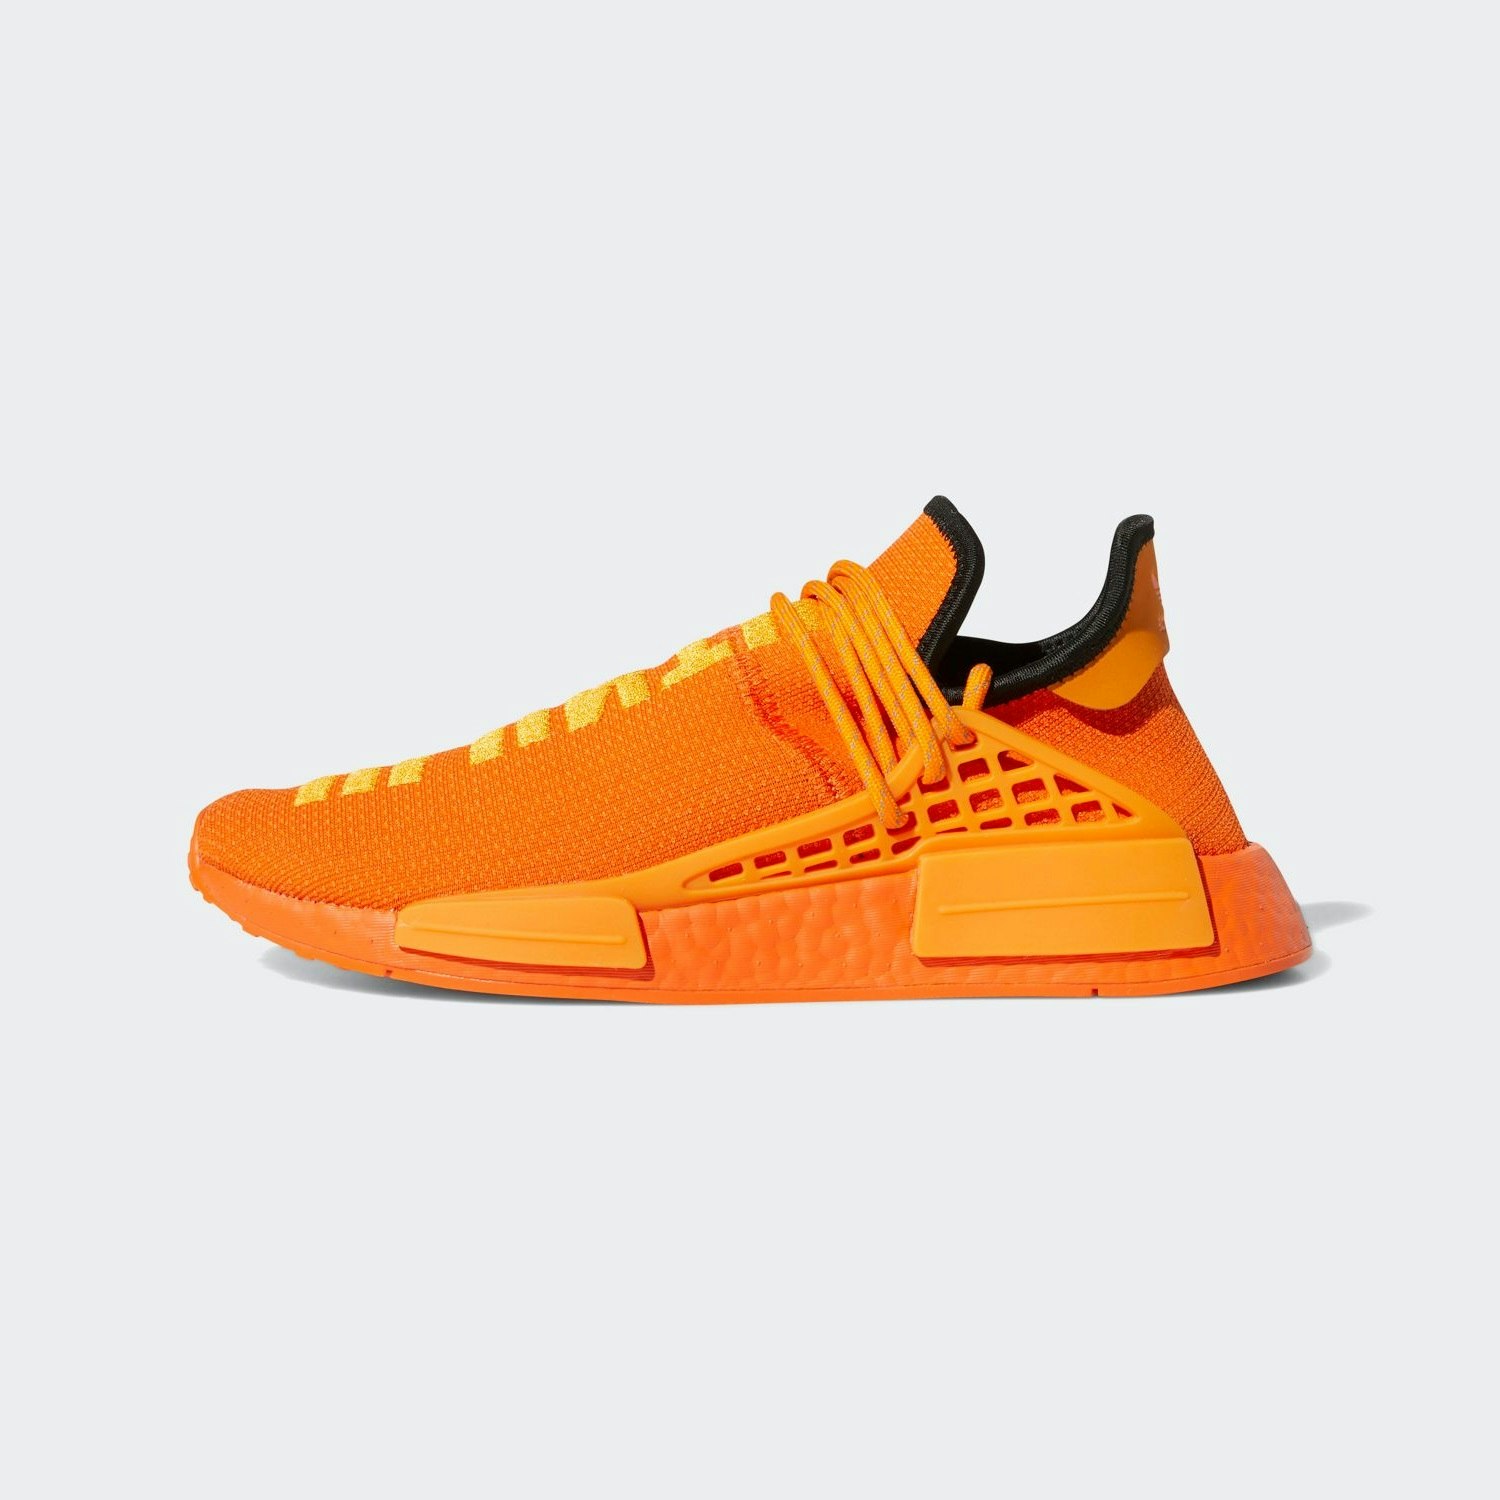 Pharrell Williams x adidas NMD HU "Orange"